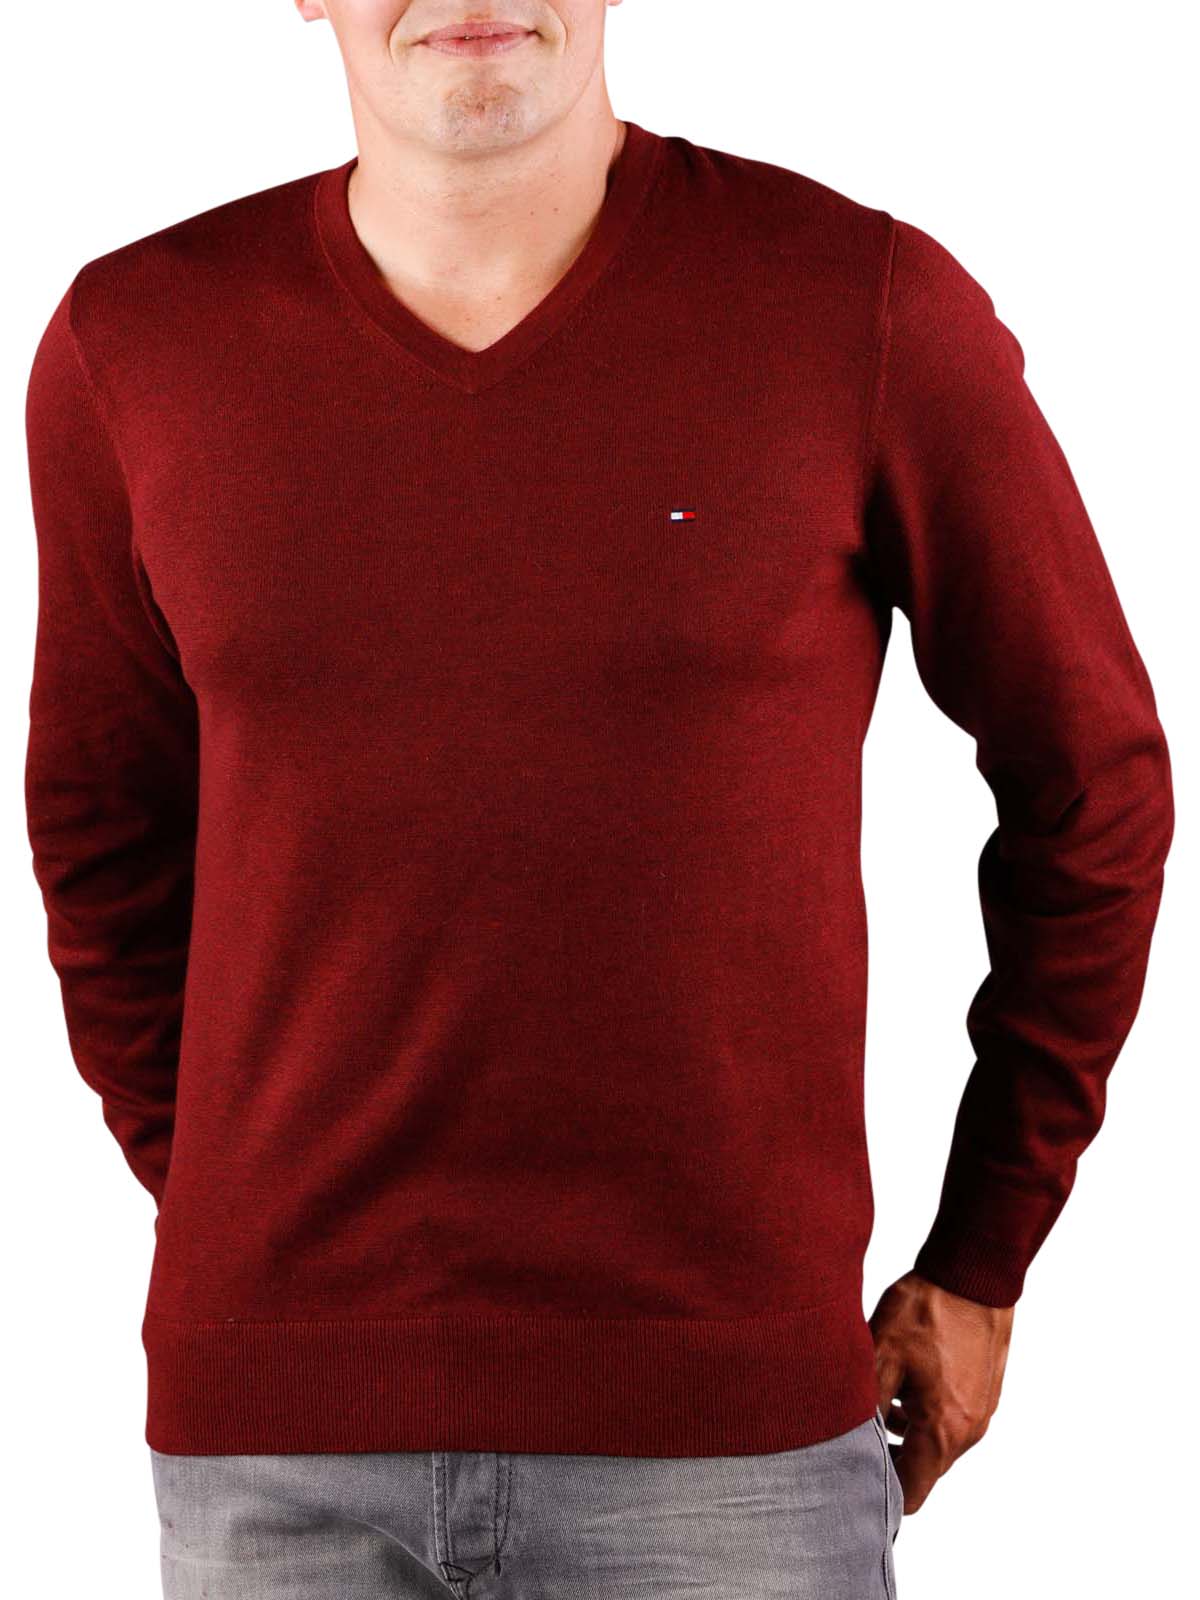 tommy hilfiger burgundy sweatshirt